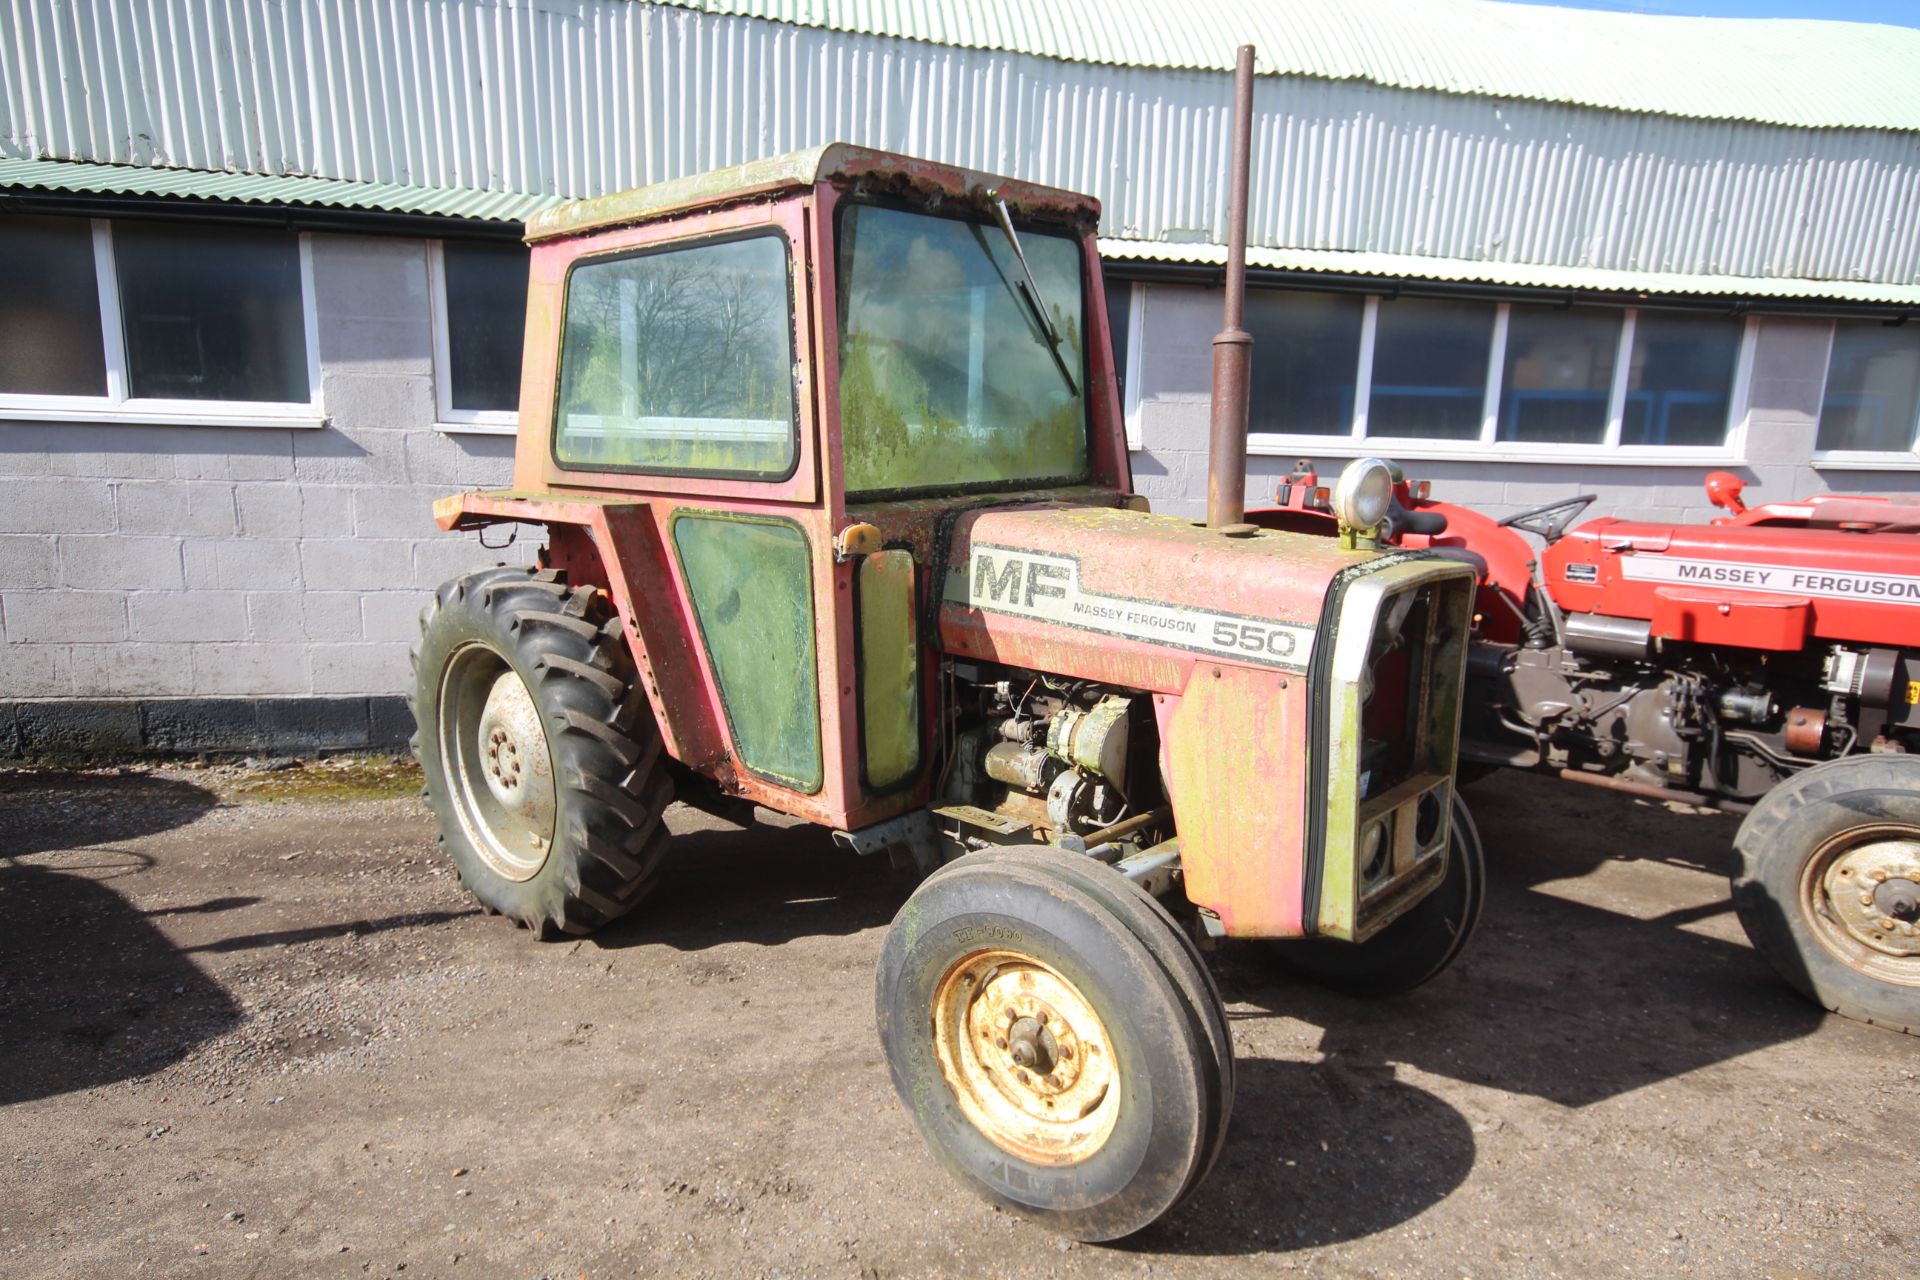 Massey Ferguson 550 2WD tractor. Registration DPV 391T (no paperwork). Date of first registration